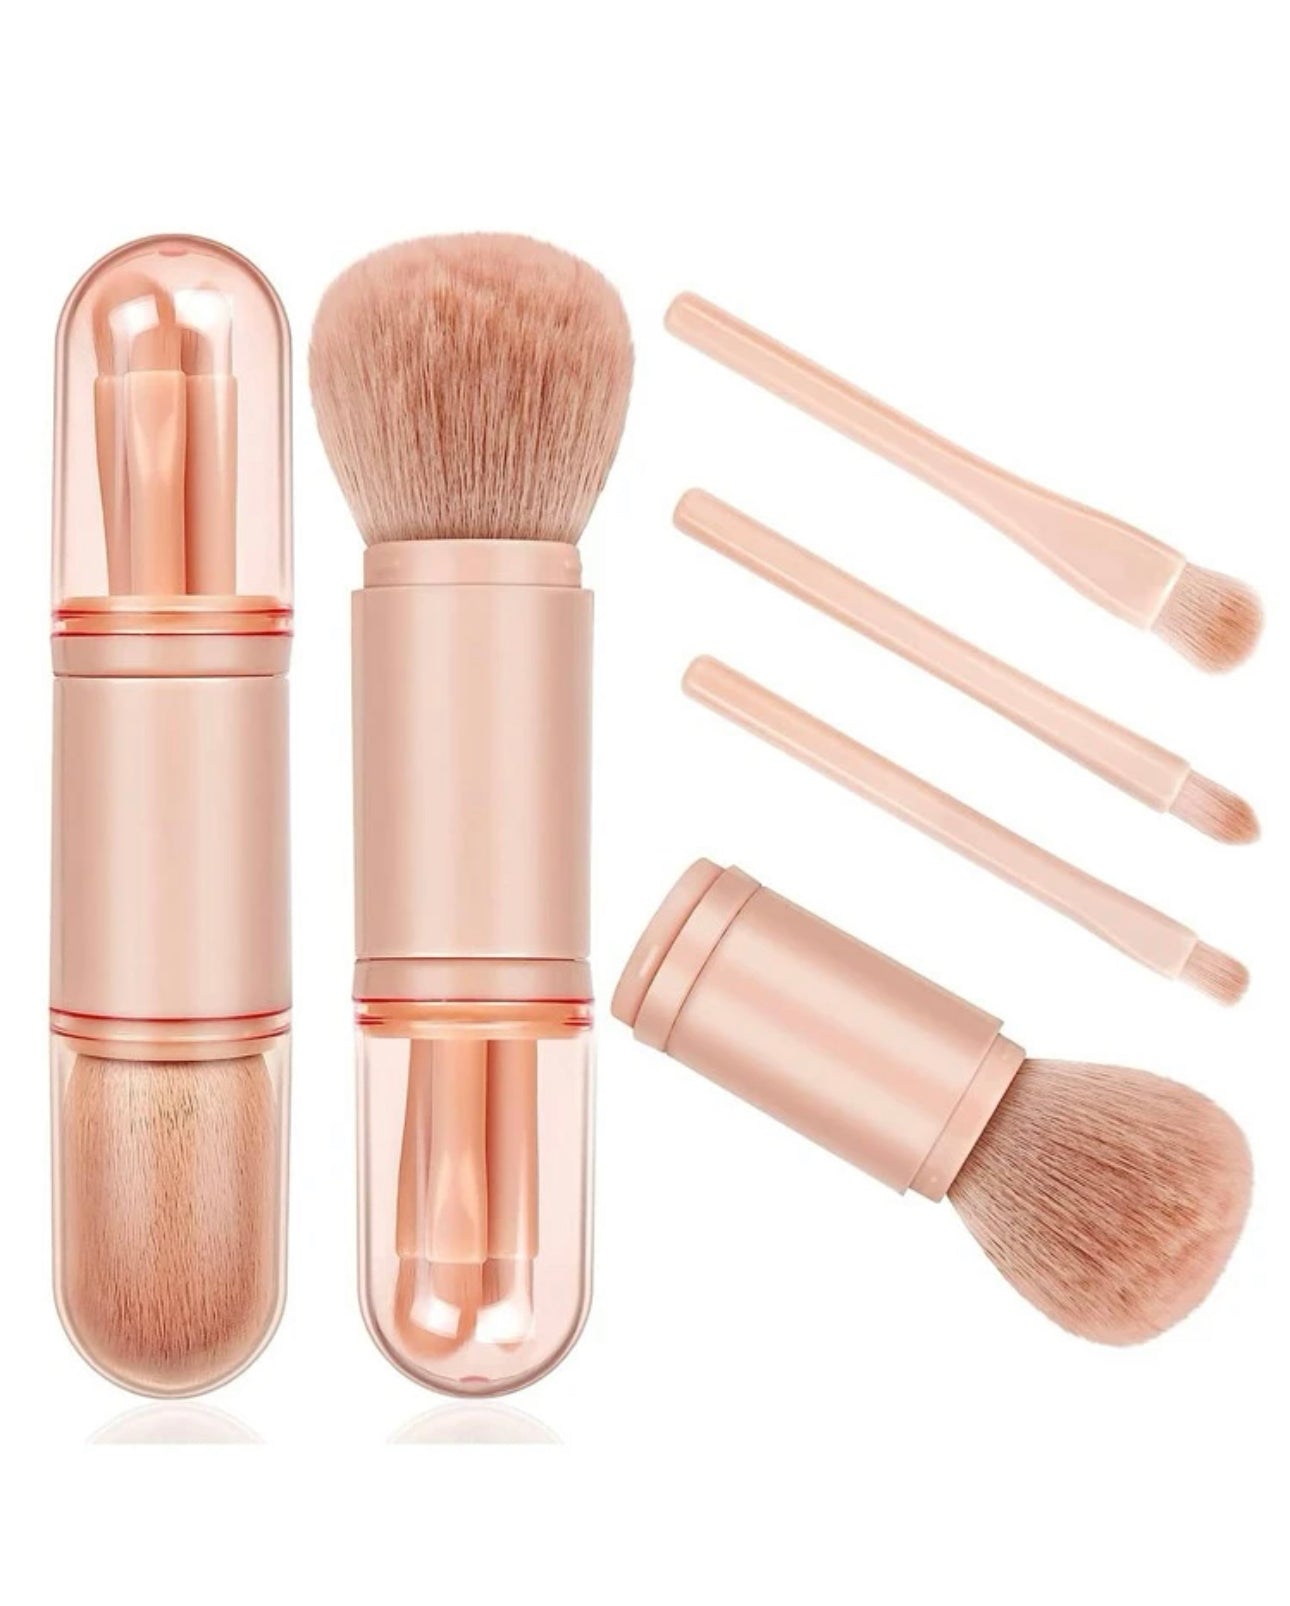 Travel Makeup Brush Set, 4-in-1 makeup brush